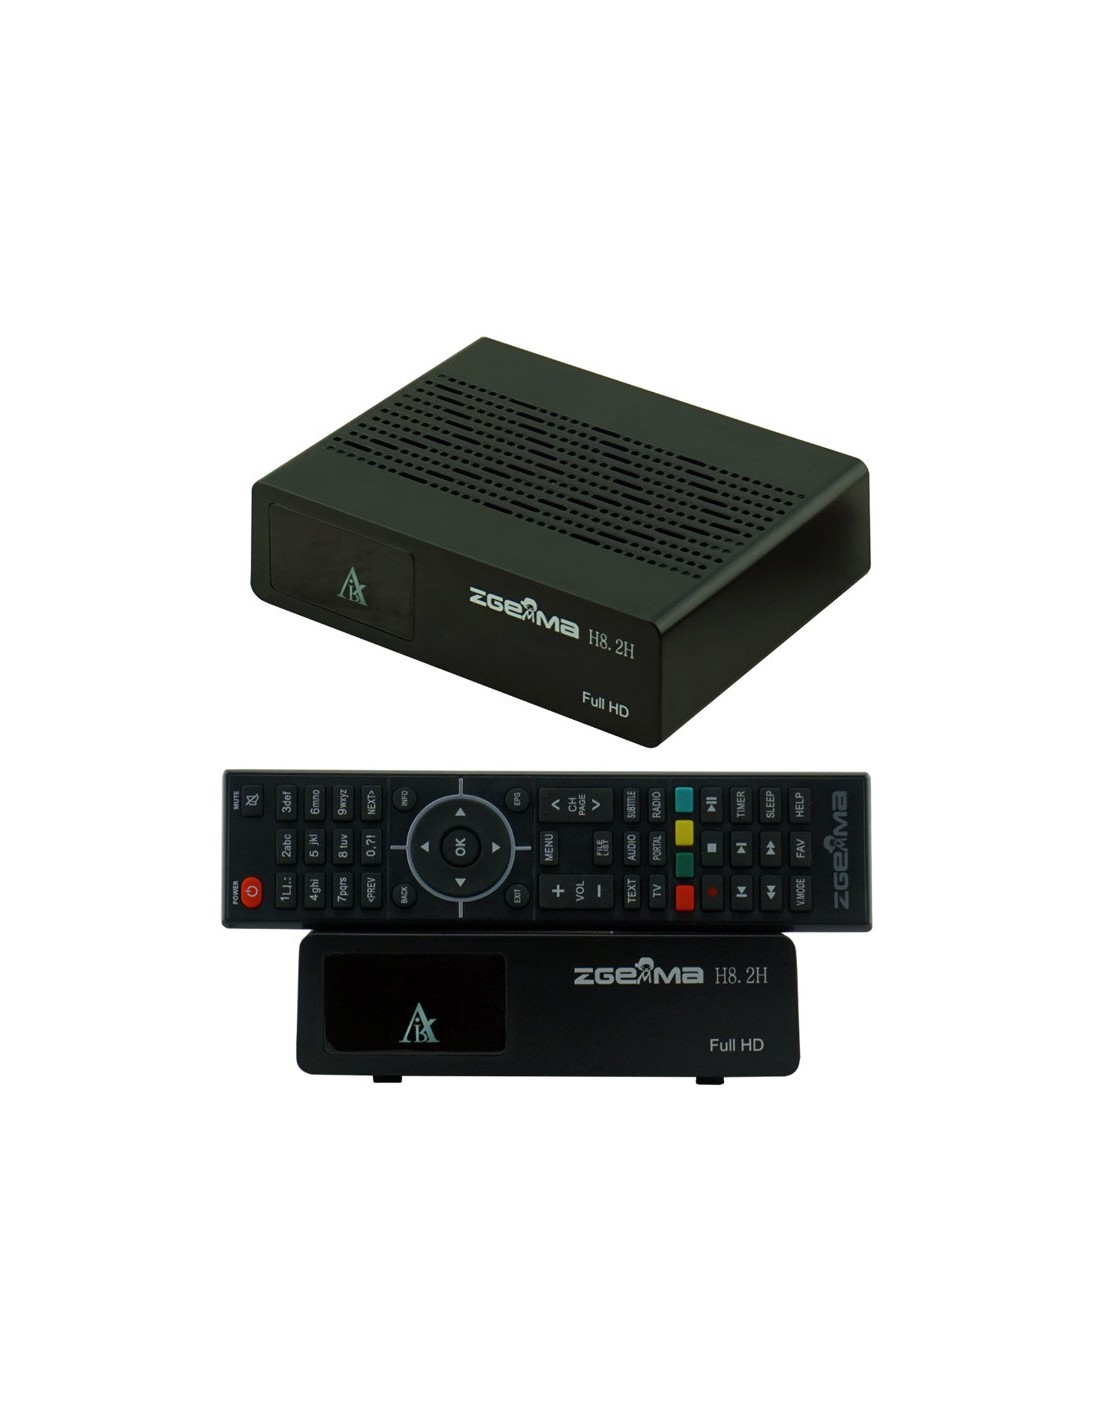 Zgemma Star H8.2H Remote Control For Sale